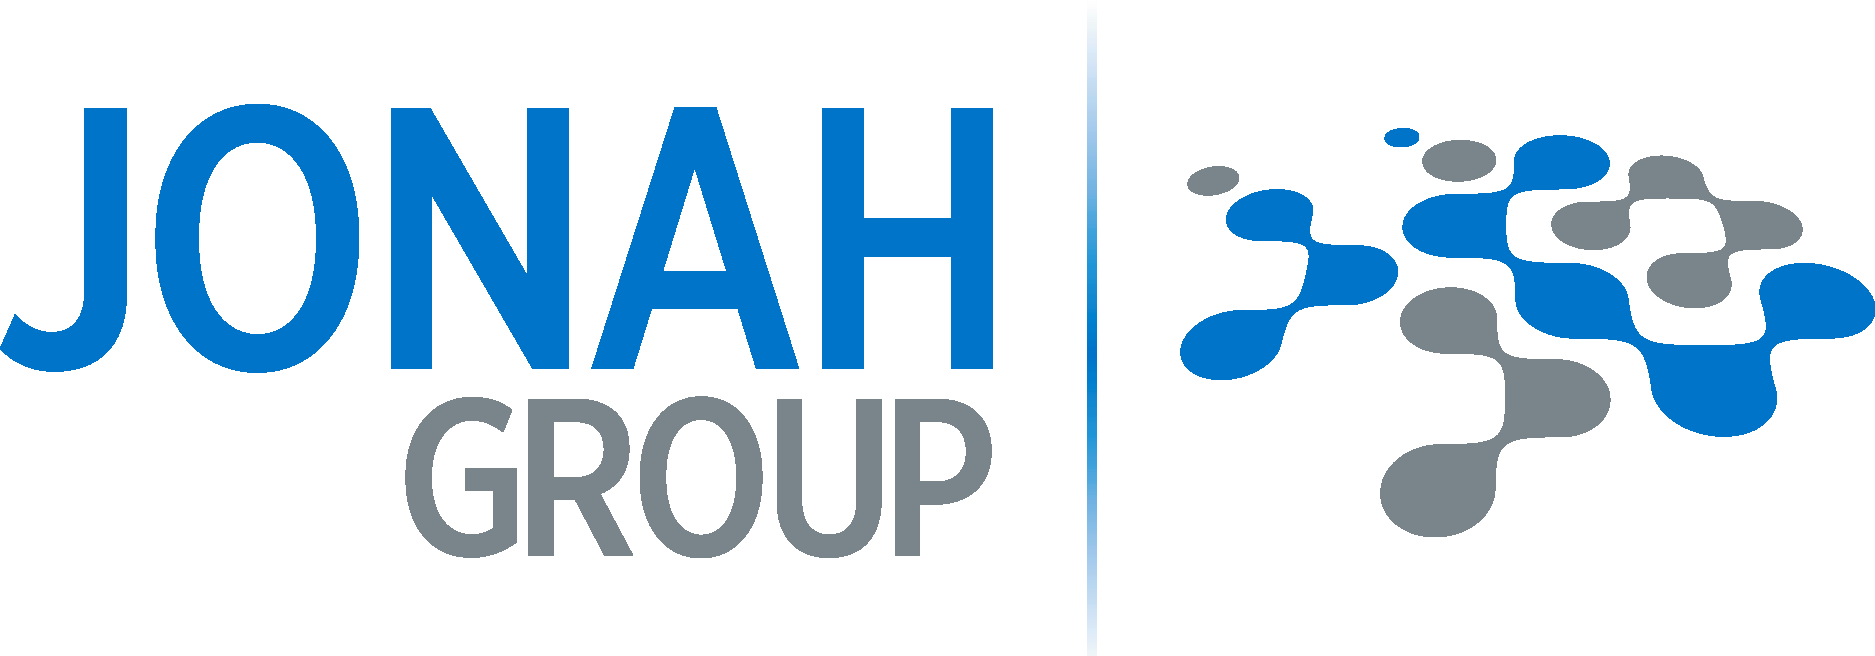 Jonah Group Logo Vector